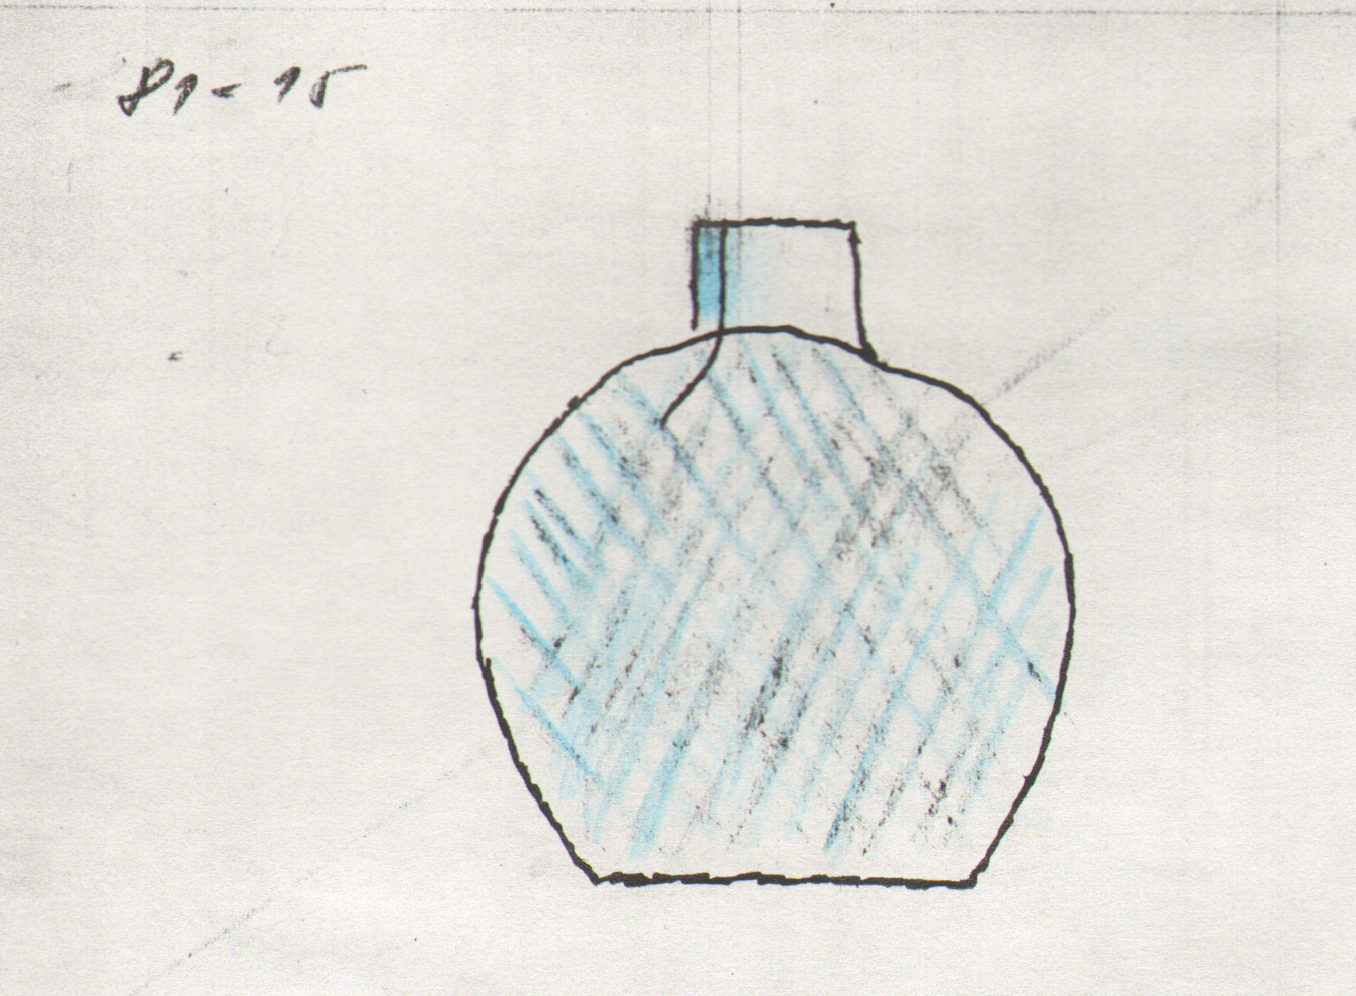 F. Vízner - 8021/22, Vase